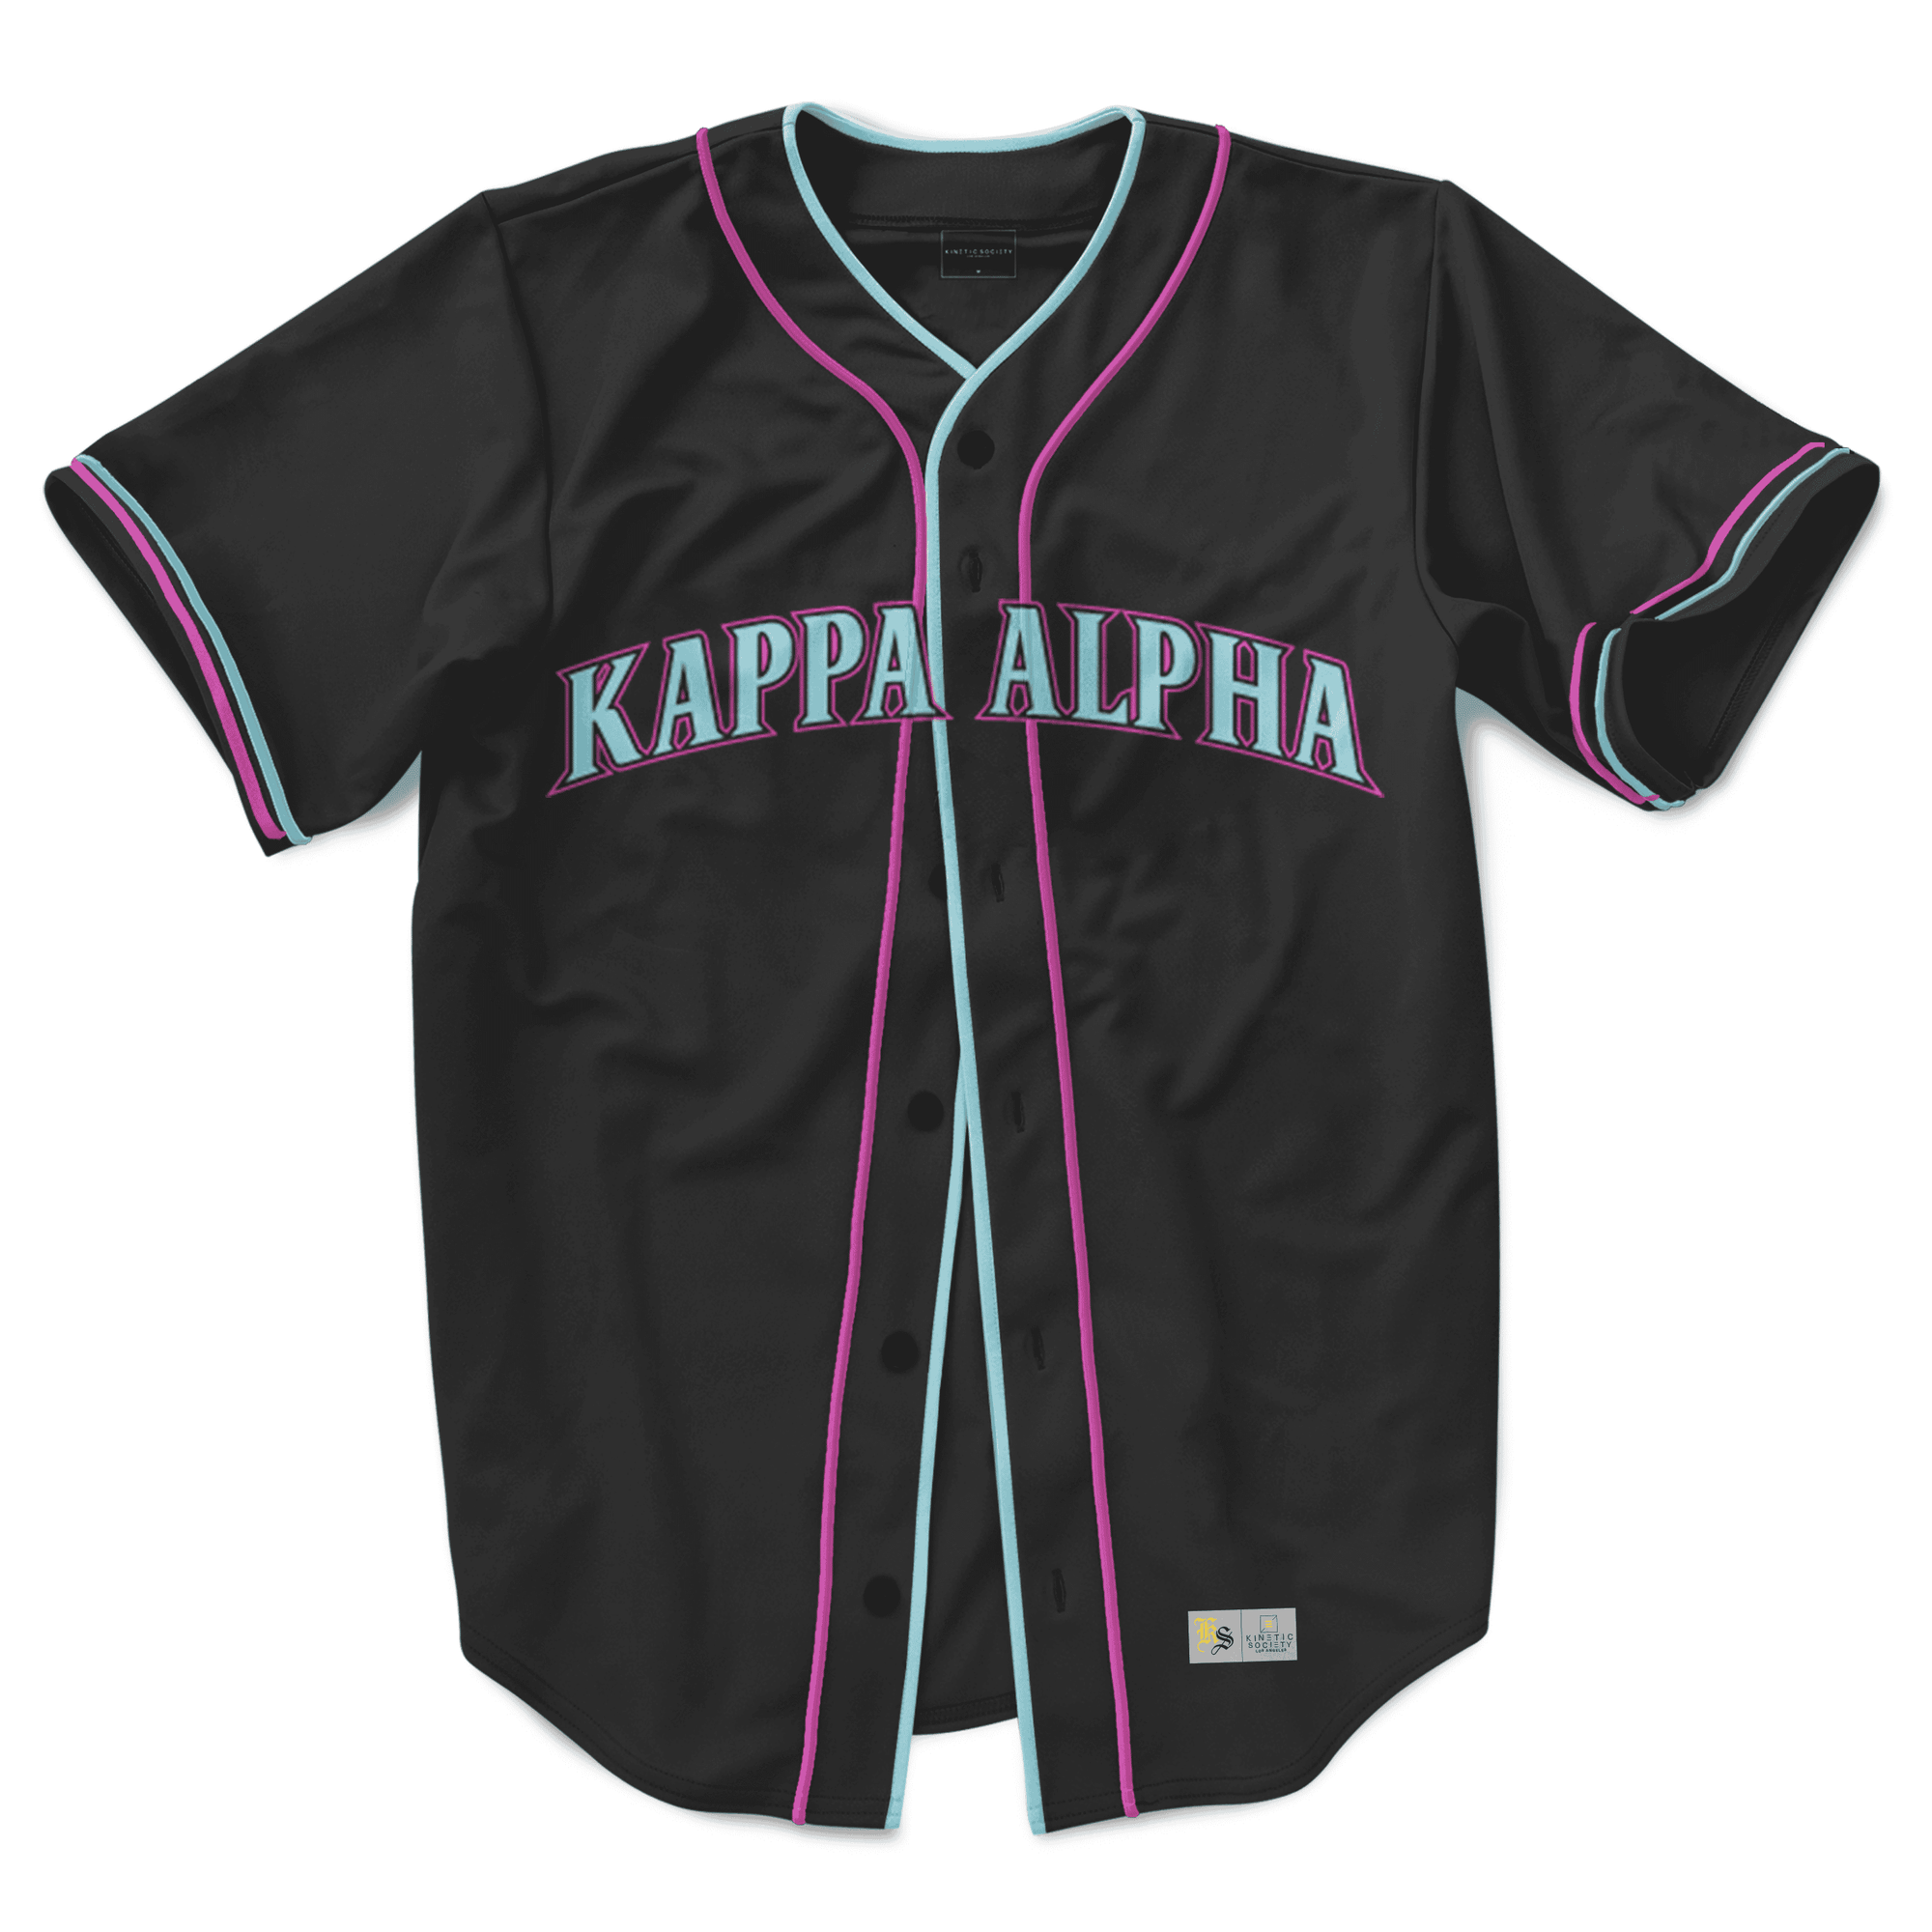 Kappa Alpha Order - Neo Nightlife Baseball Jersey